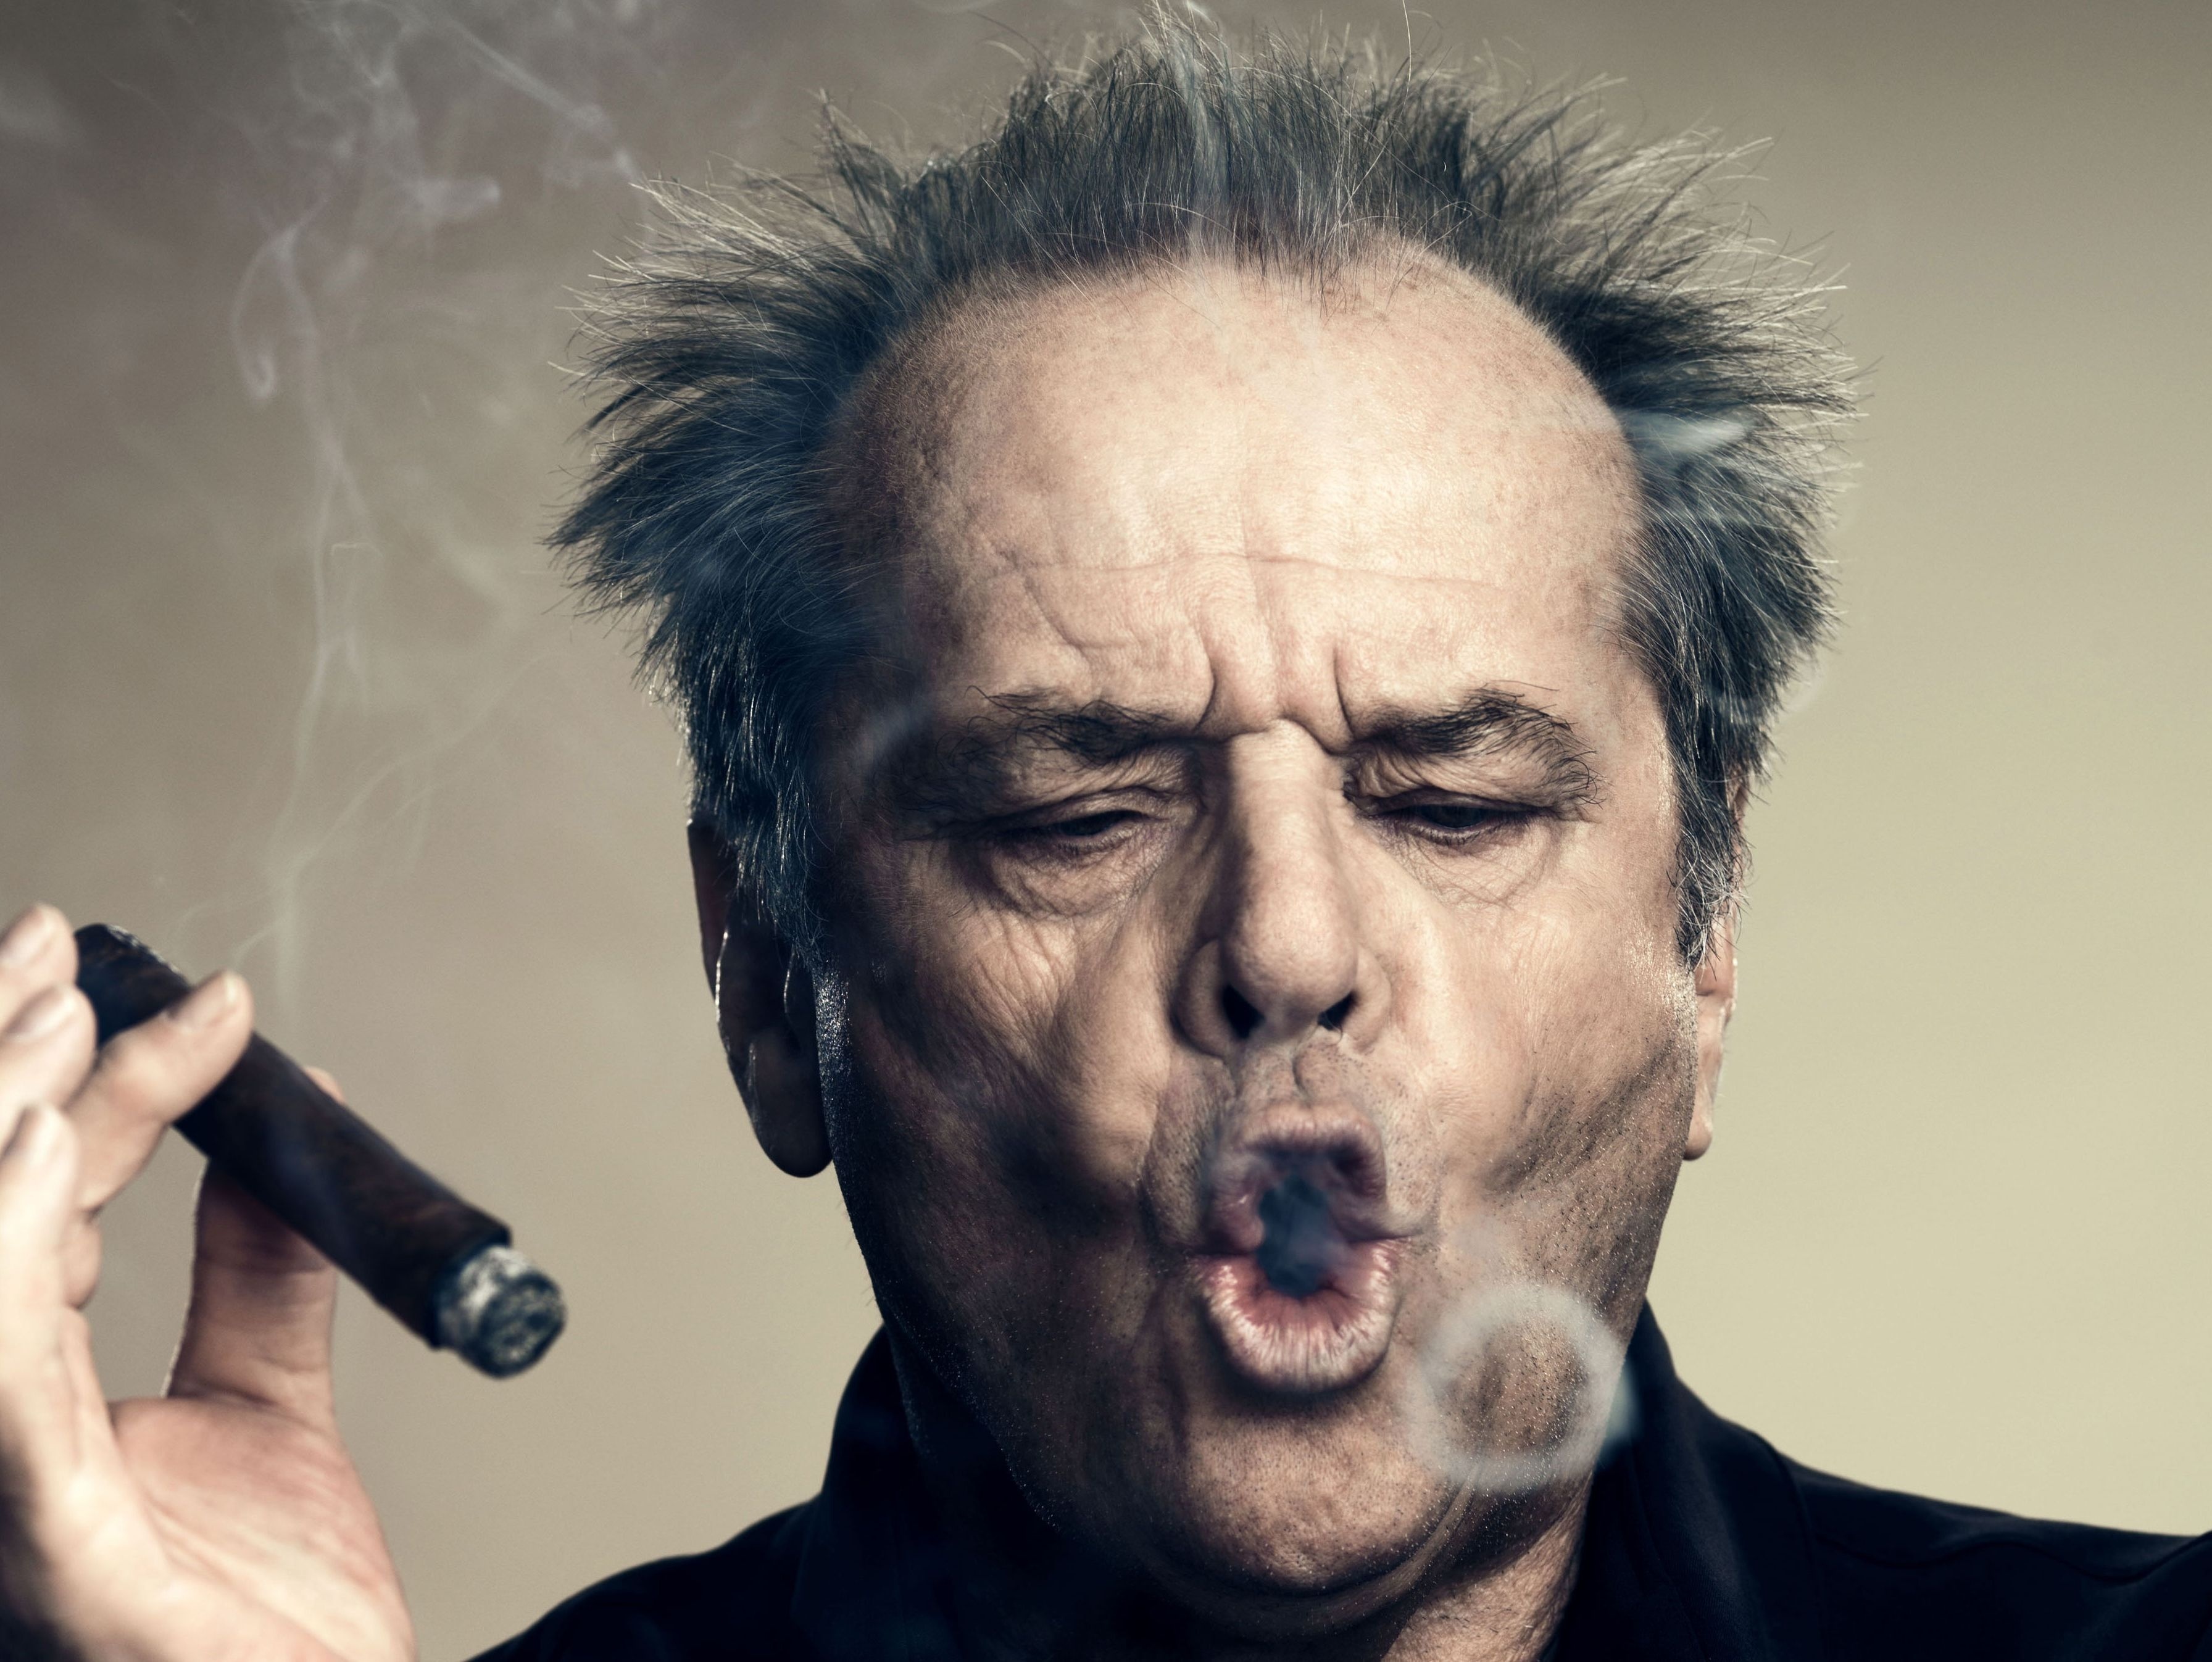 man-jack-nicholson-actor-and-cigar-smoke.jpg